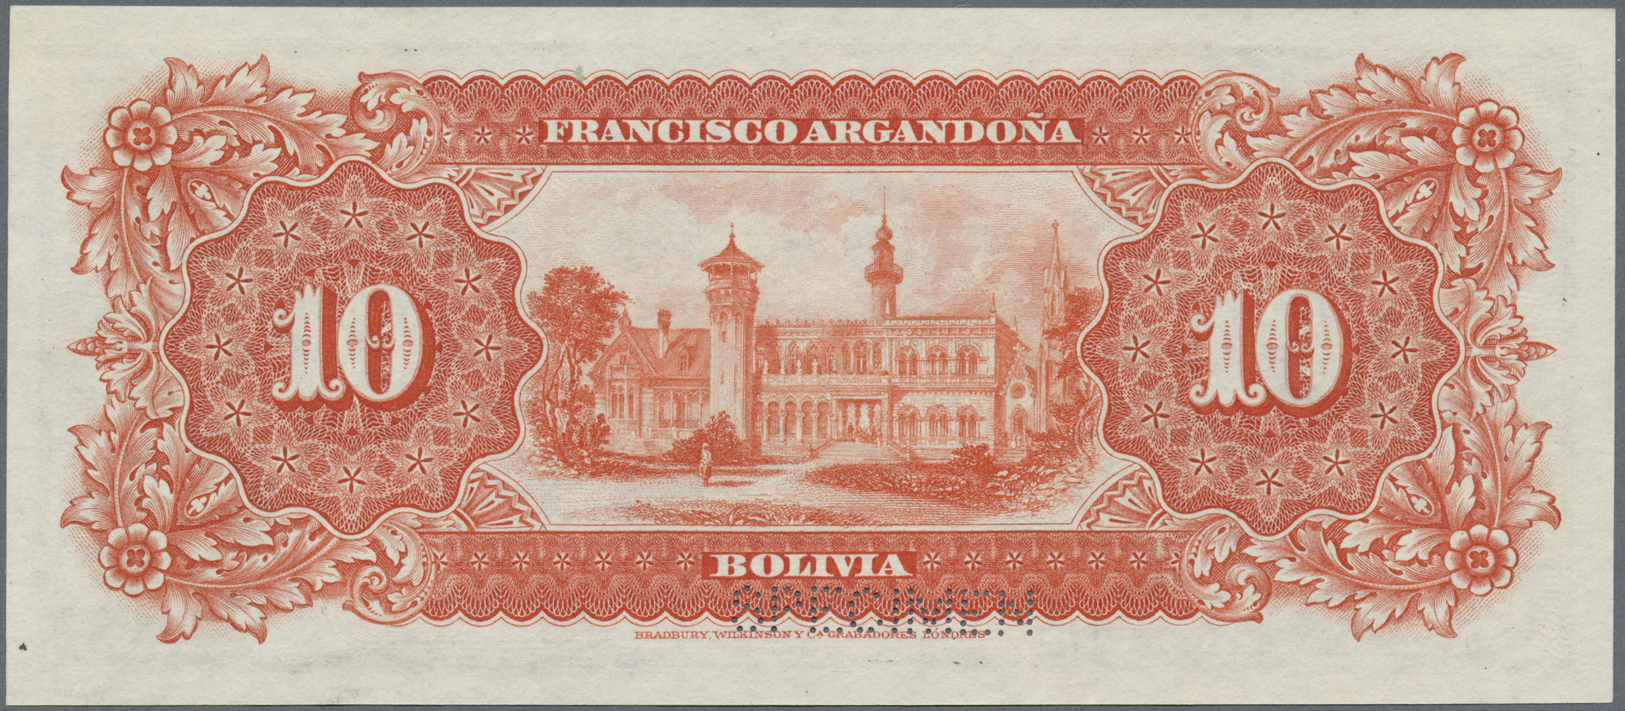 00325 Bolivia / Bolivien: Banco Francisco Argandoña 10 Bolivianos 1893 SPECIMEN, P.S143s With Serial Number B70000 At Le - Bolivia